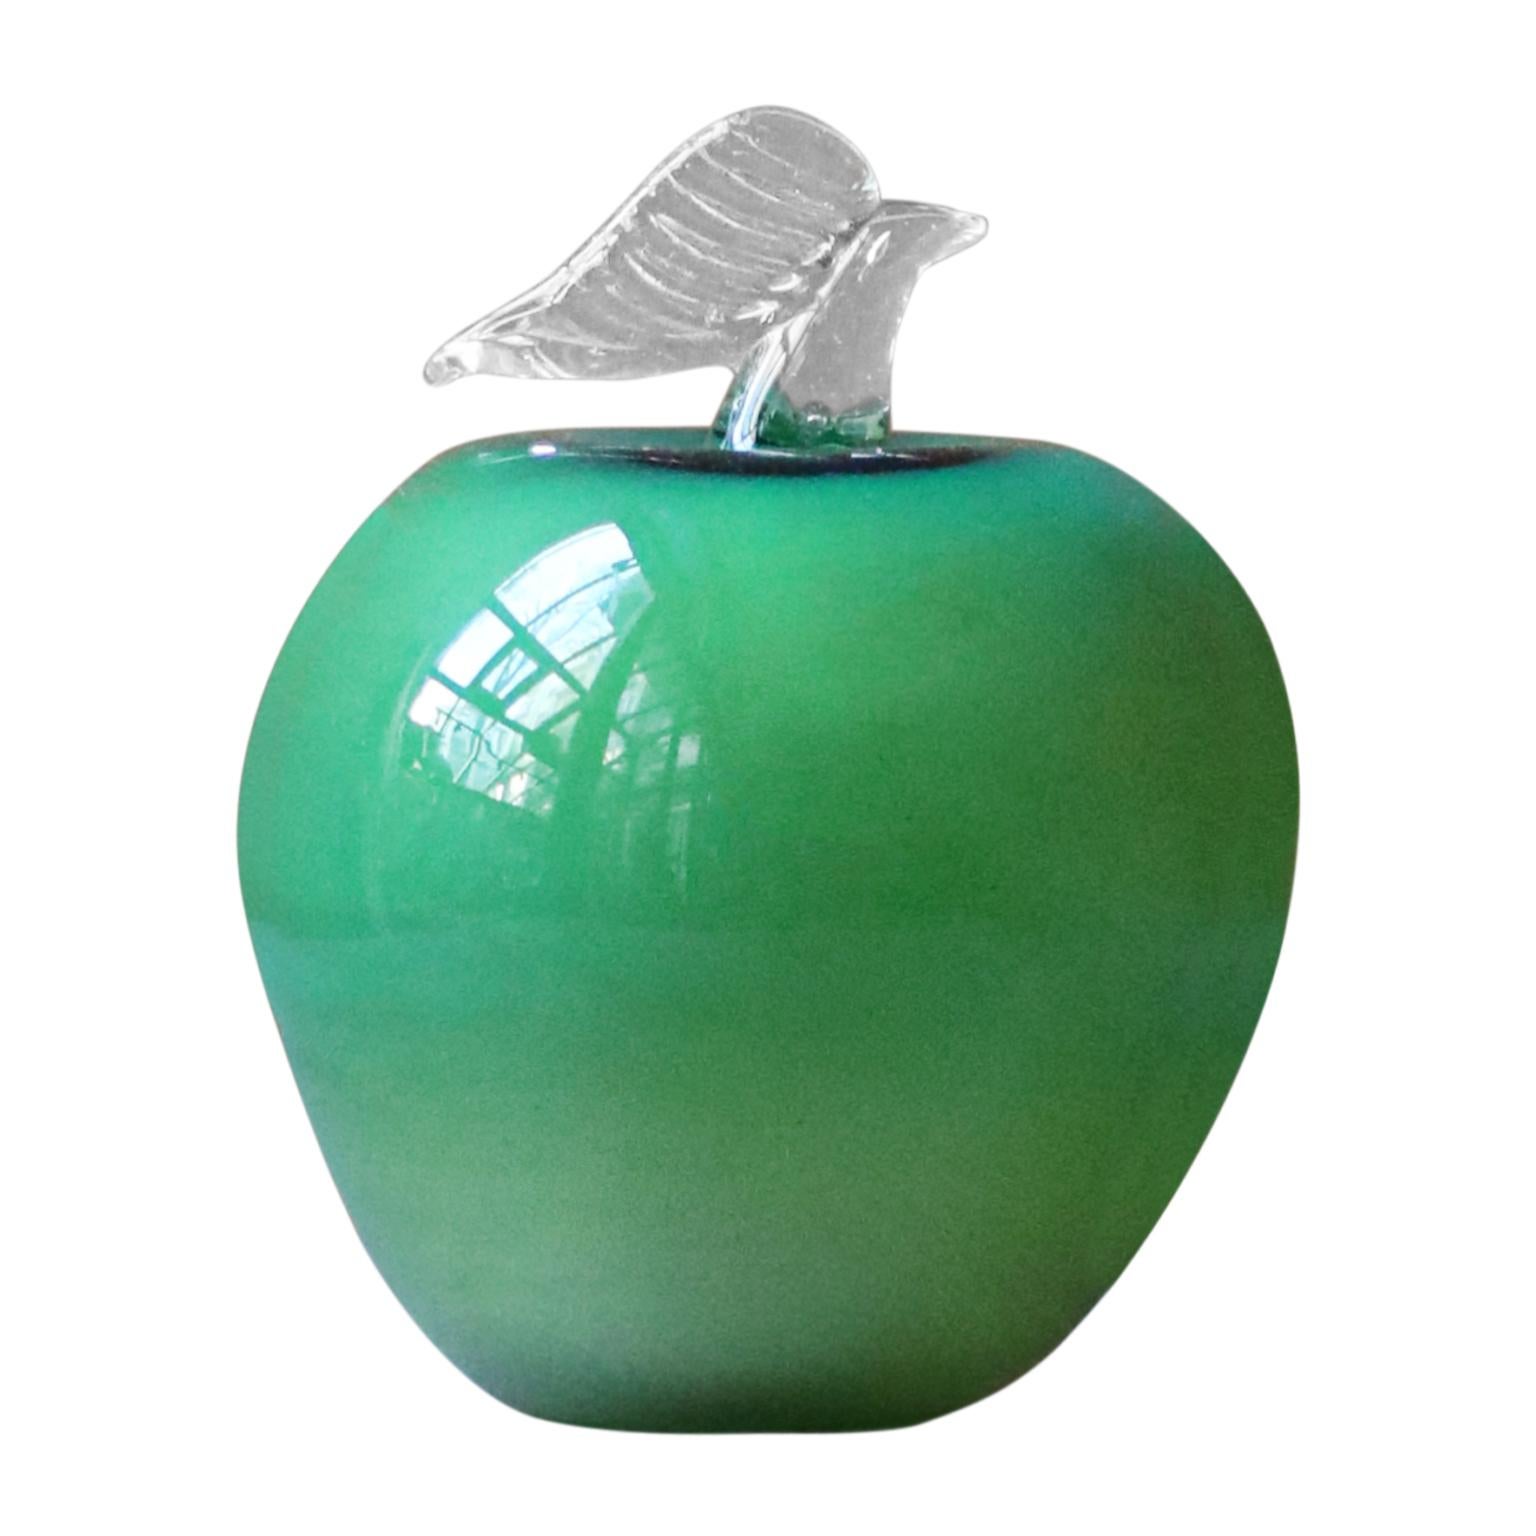 Persian Green Apple Blown Glass Decorative Object